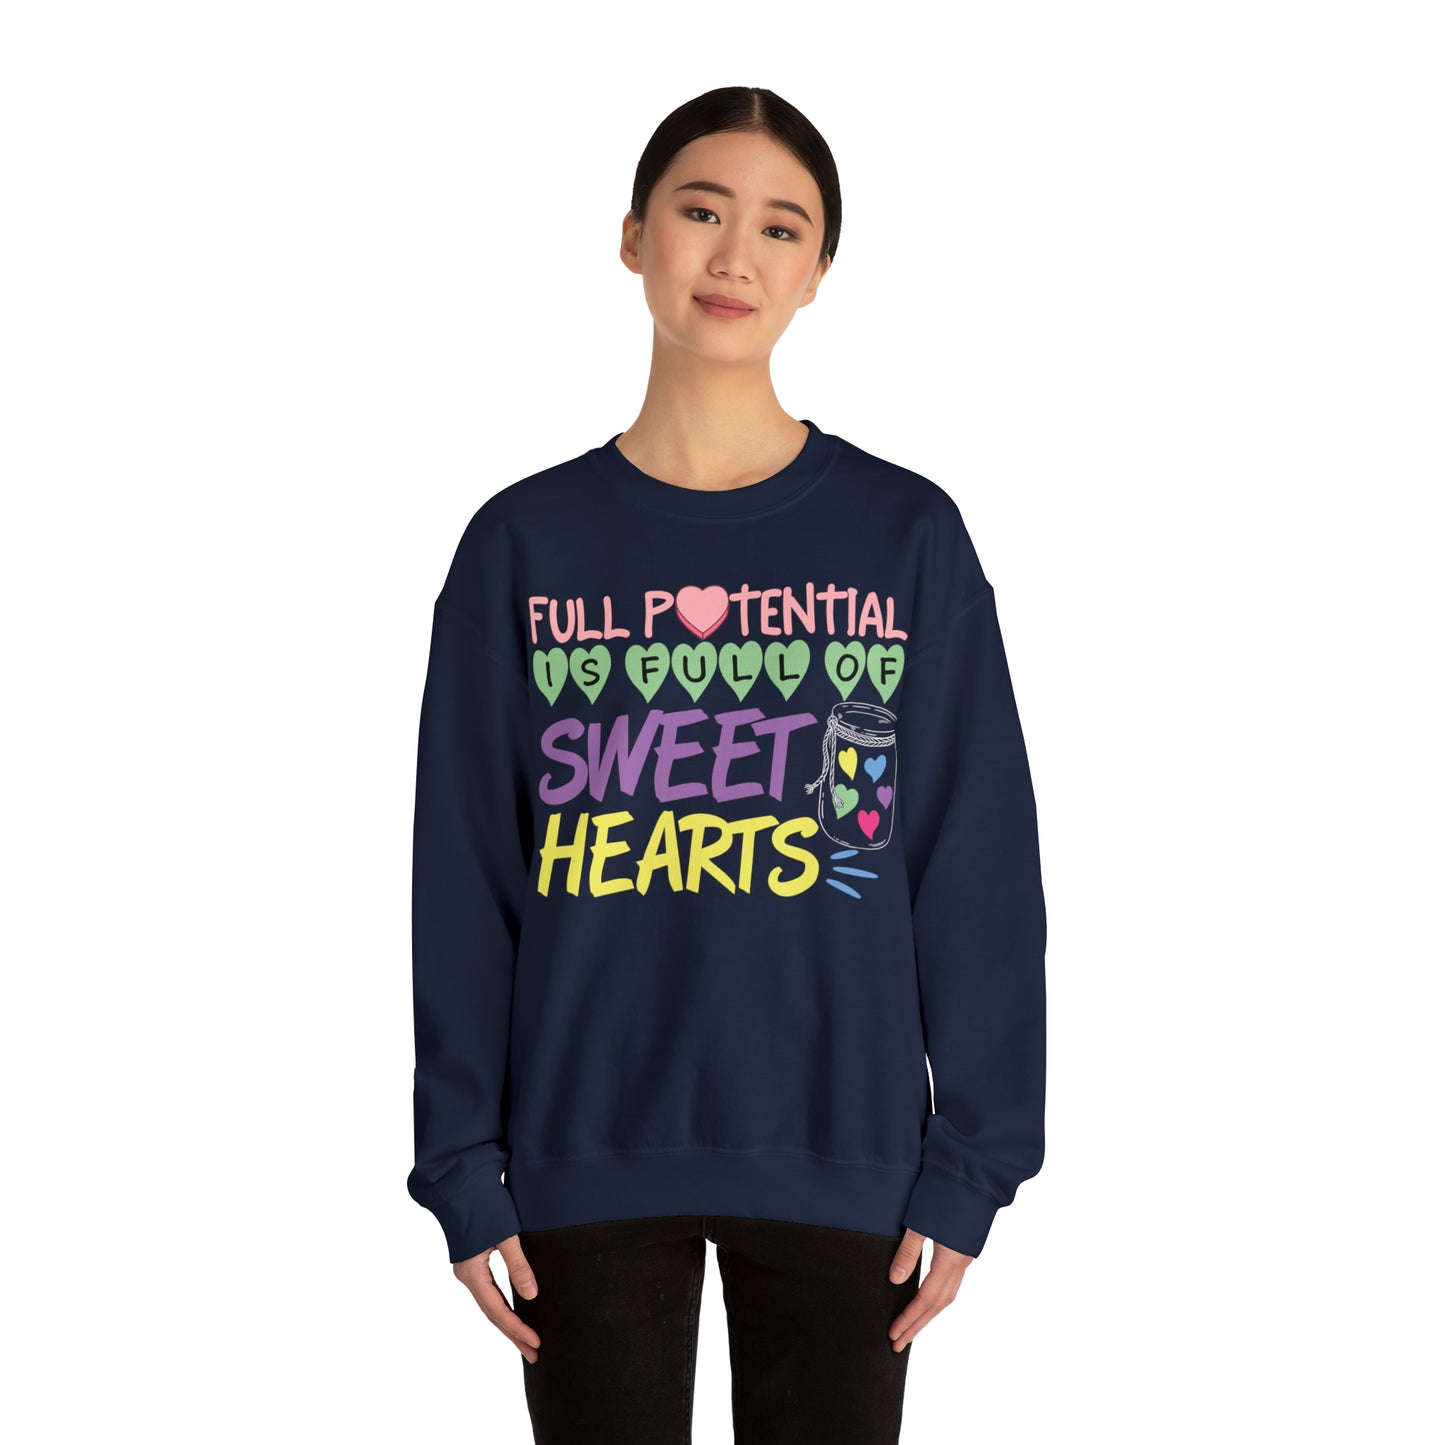 Full Potential Is Full Of Sweet Hearts Crewneck Sweatshirt